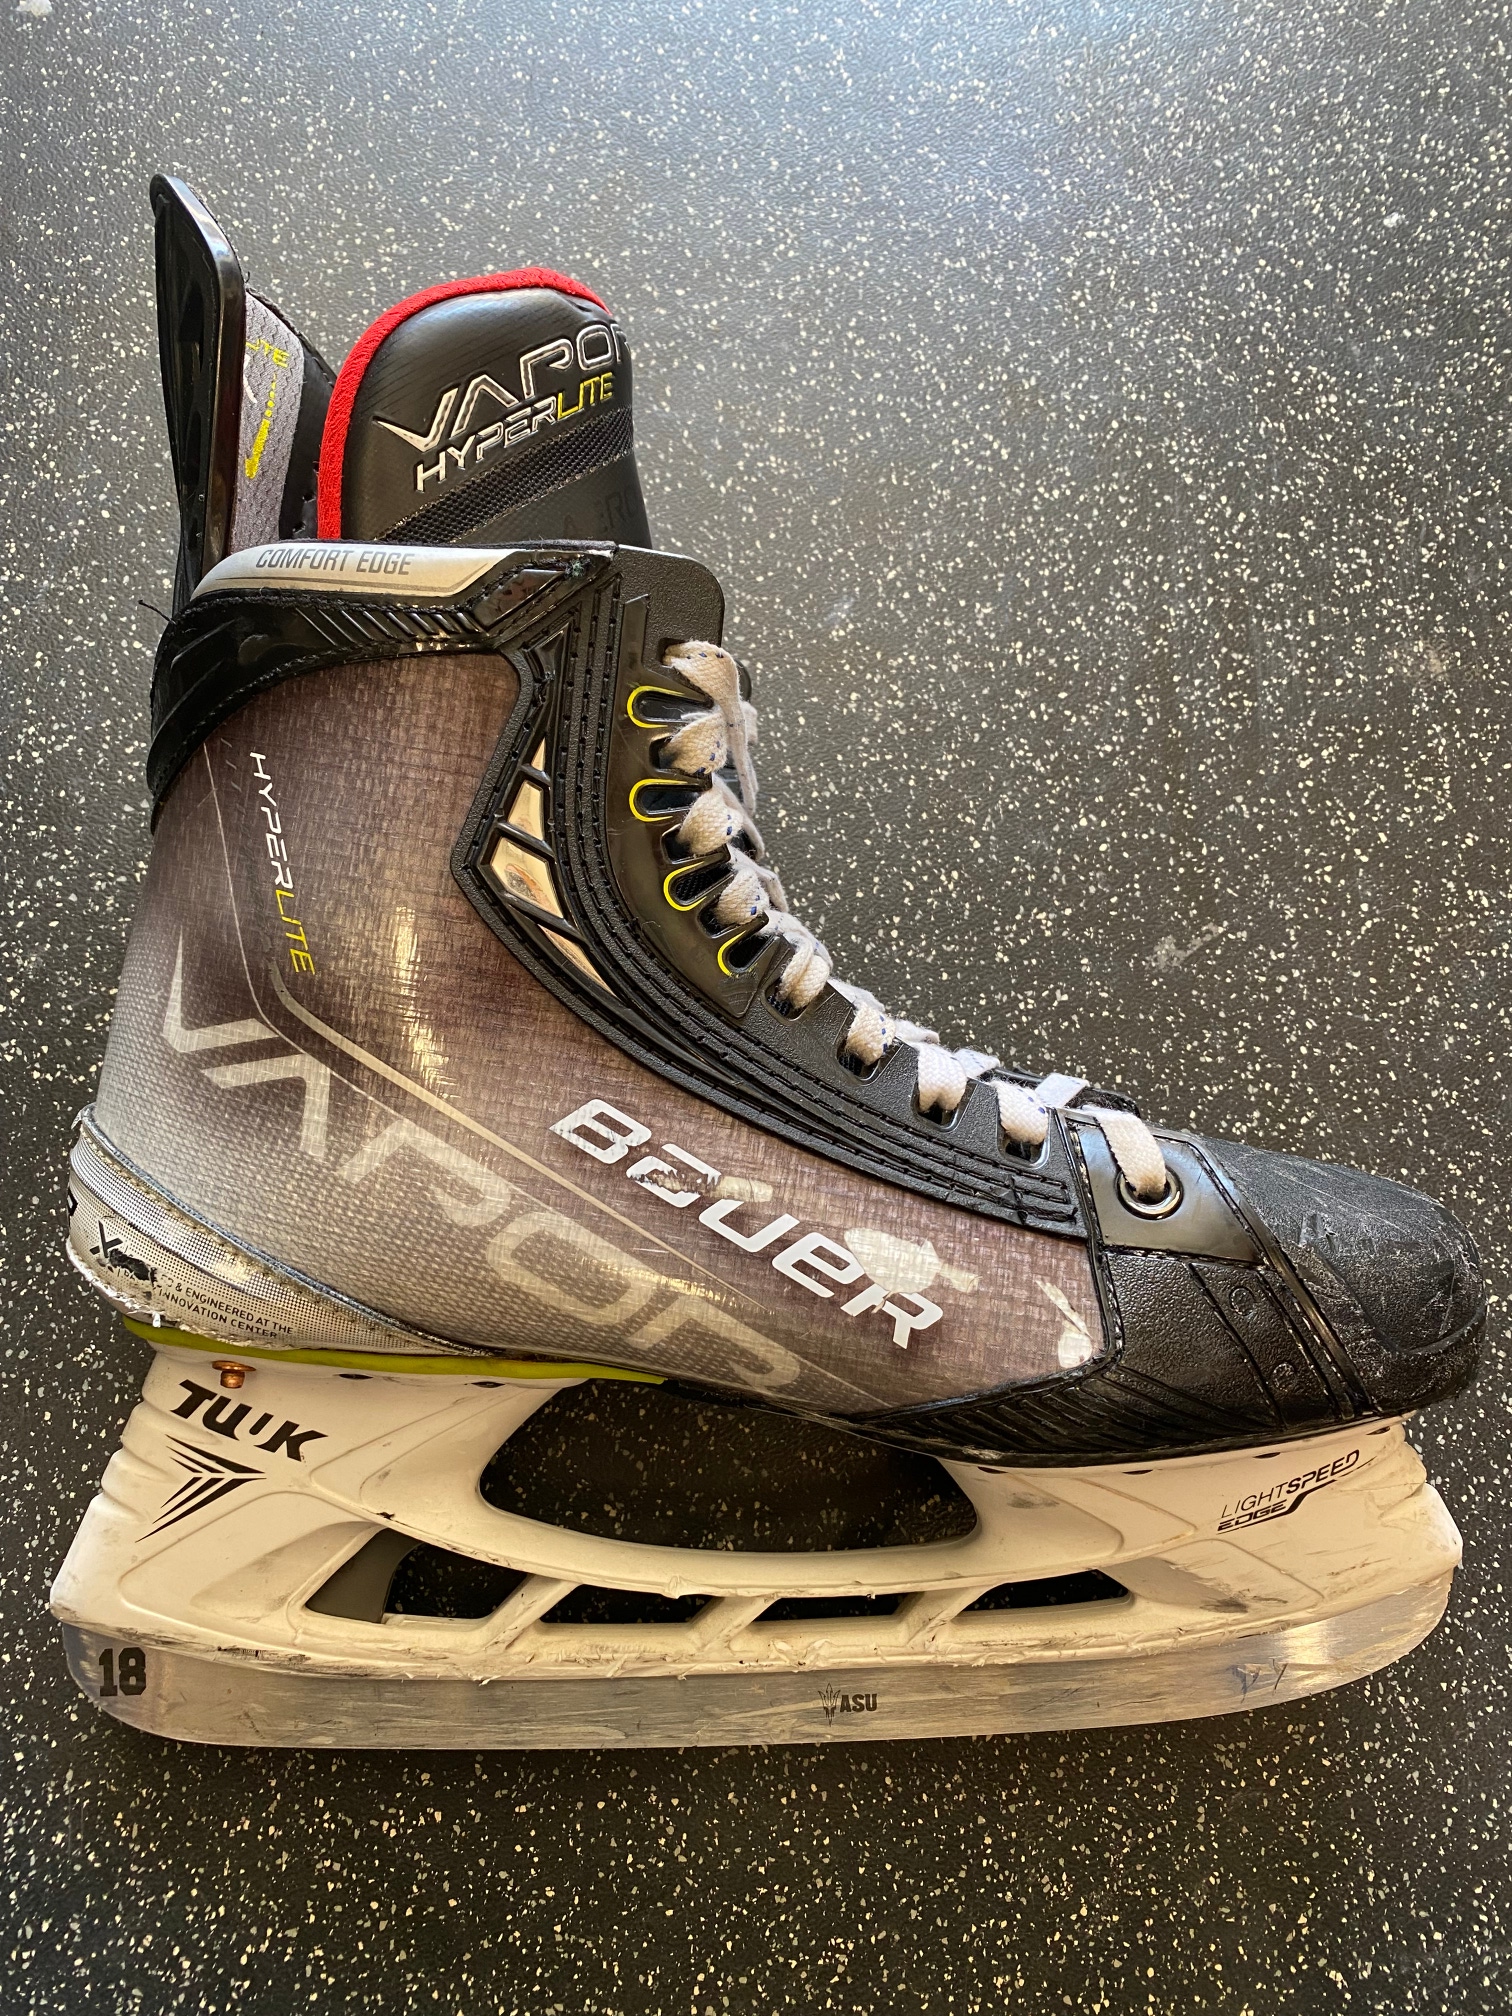 Used Bauer Vapor Hyperlite Hockey Skates 8